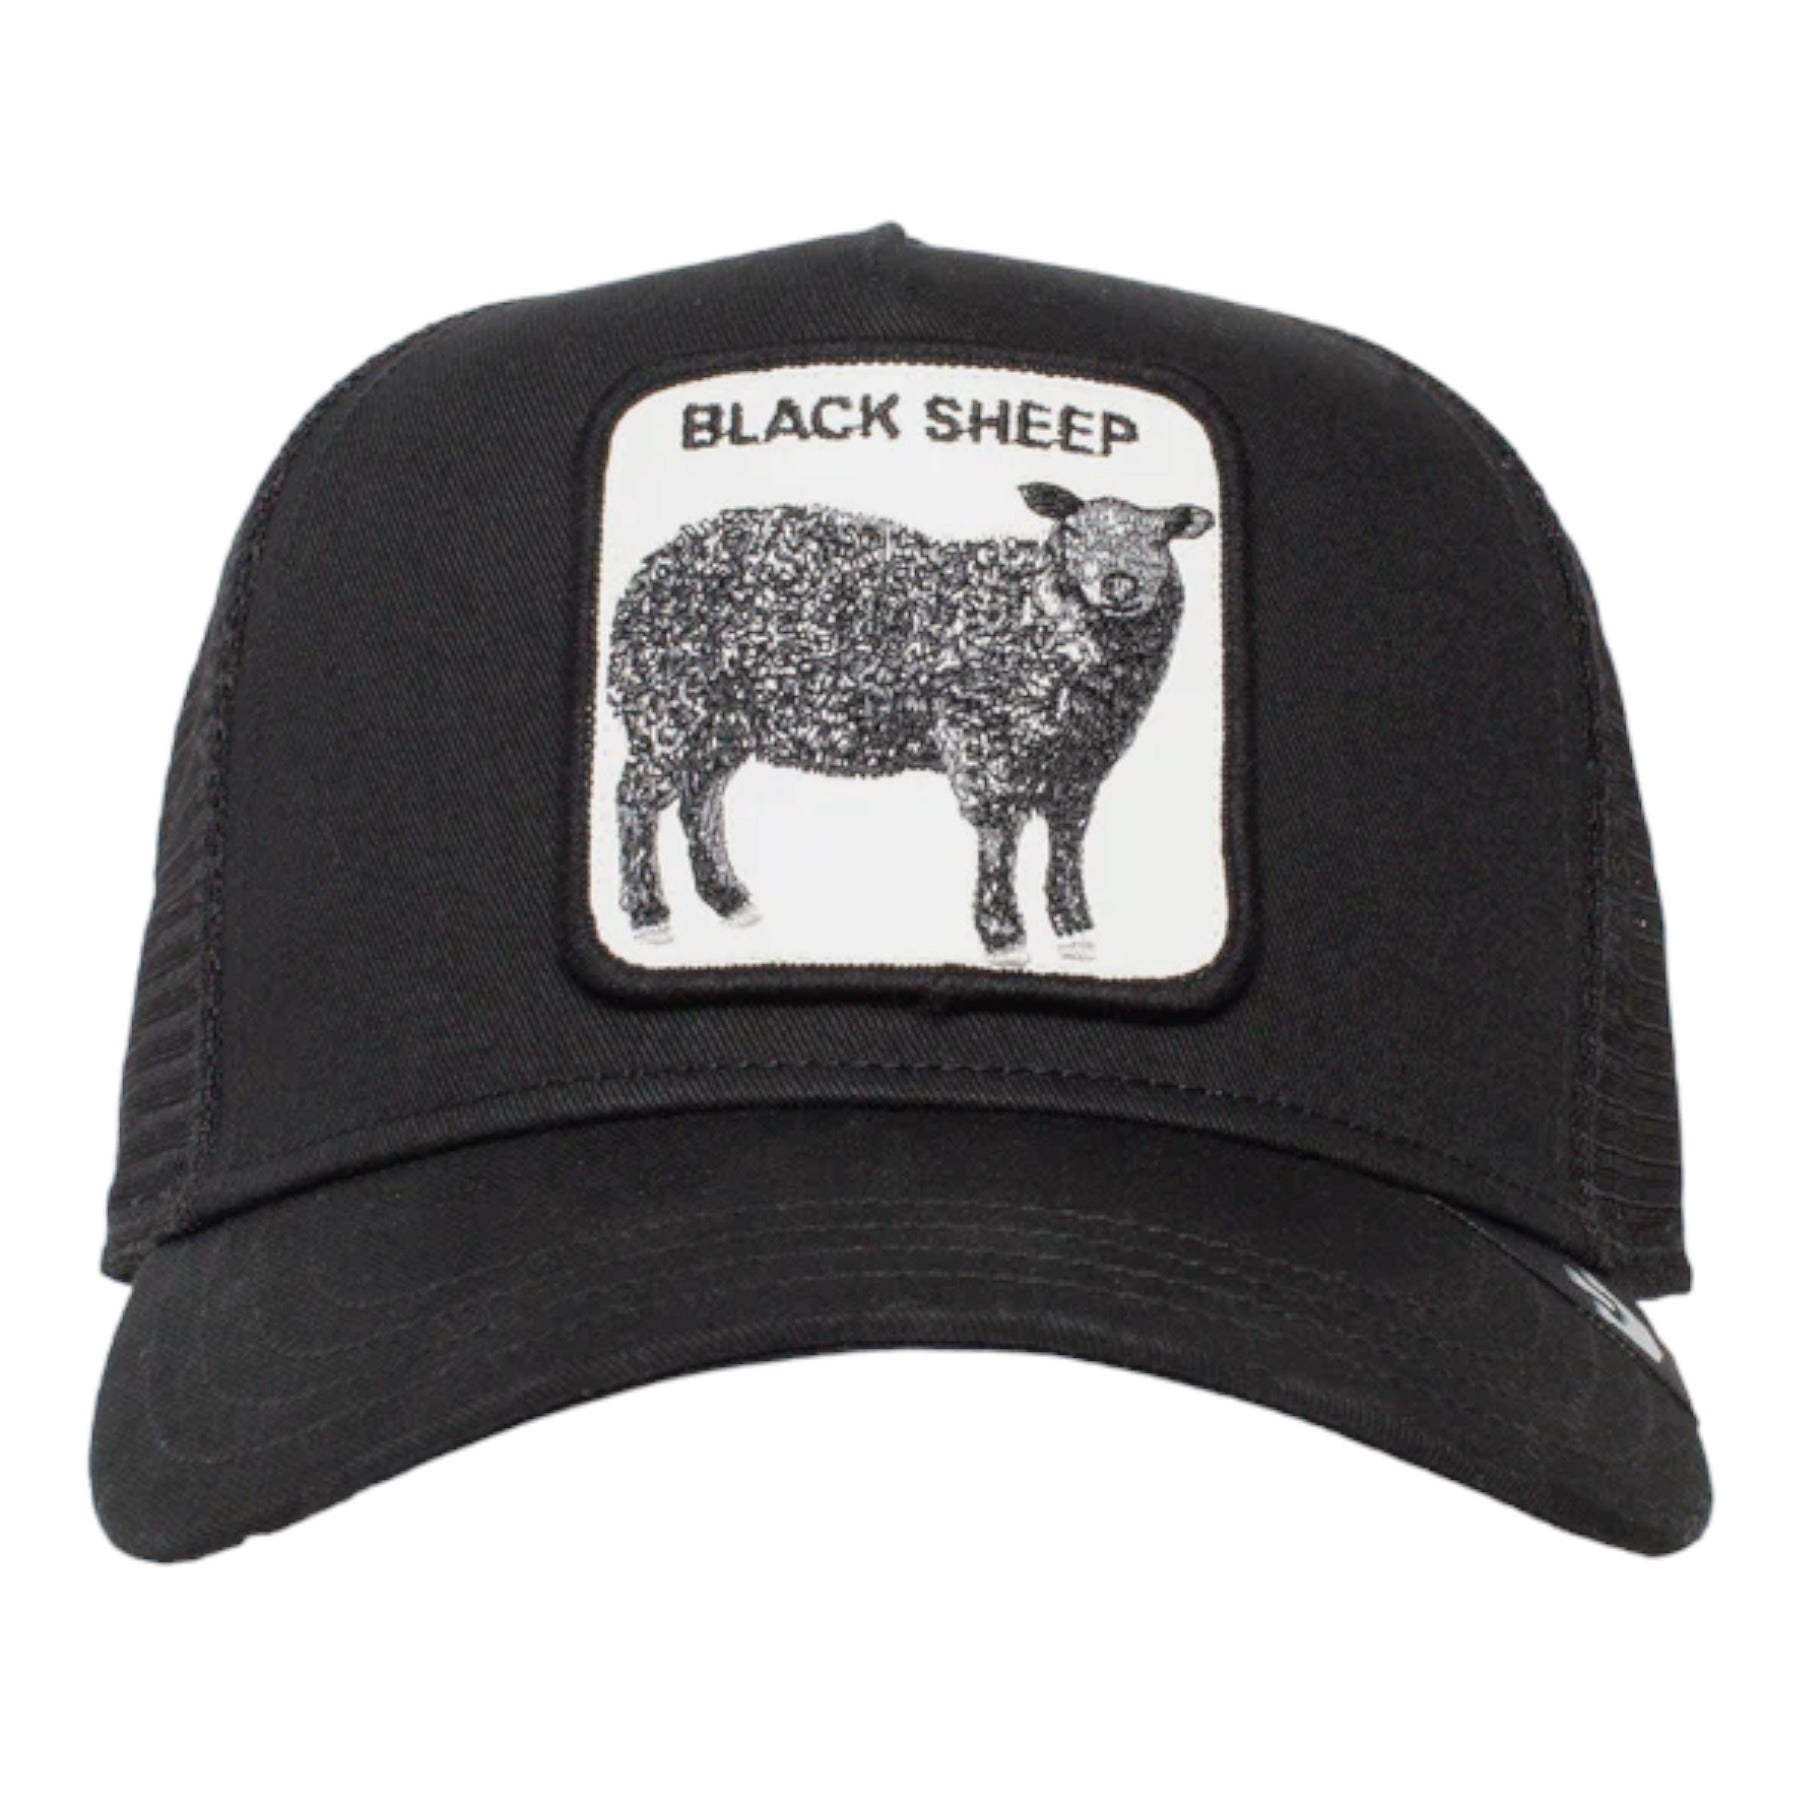 Goorin Bros. The Black Sheep Snapback - Black